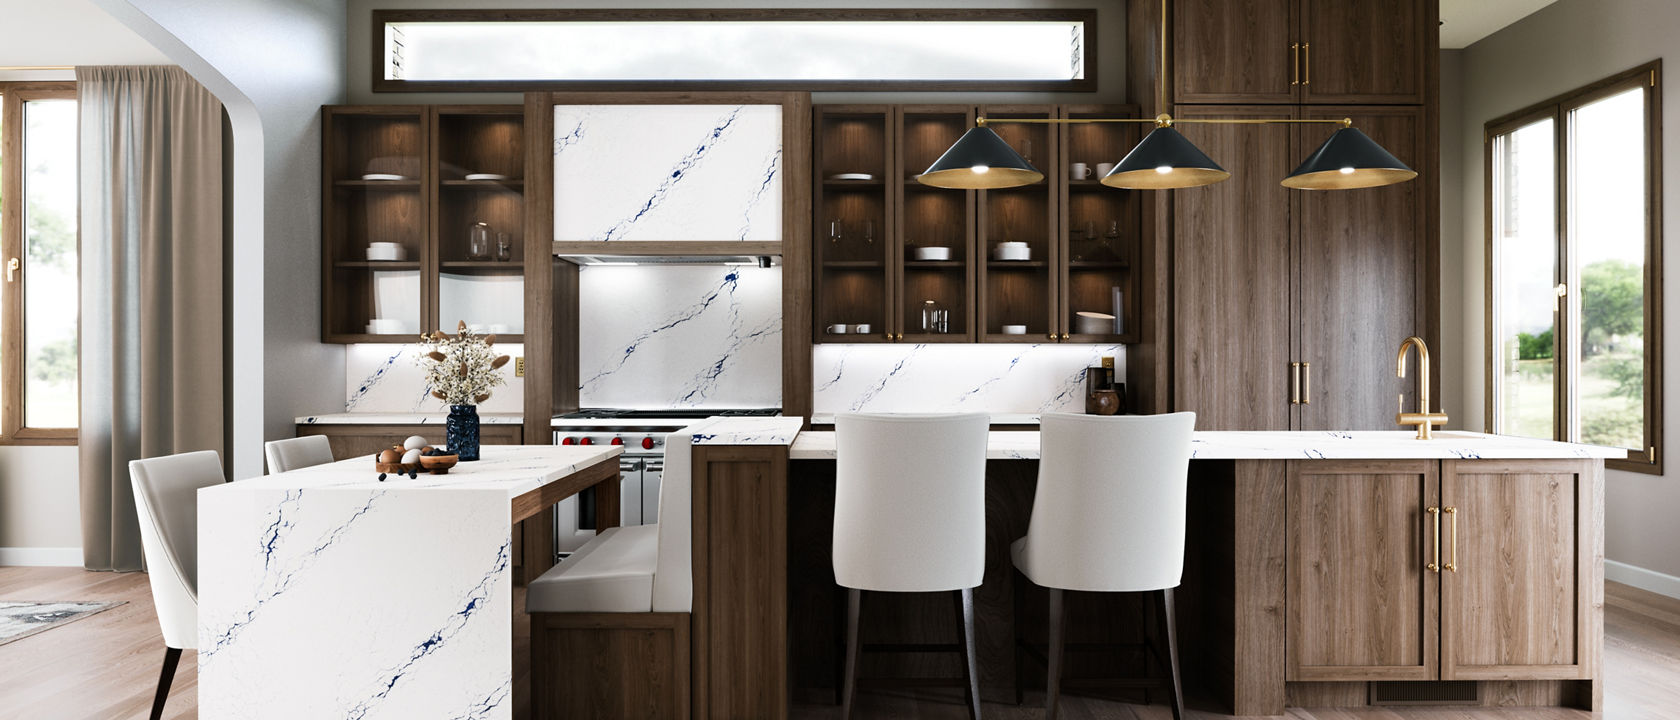 A modern kitchen with Inverness Cobalt quartz countertops and backsplash